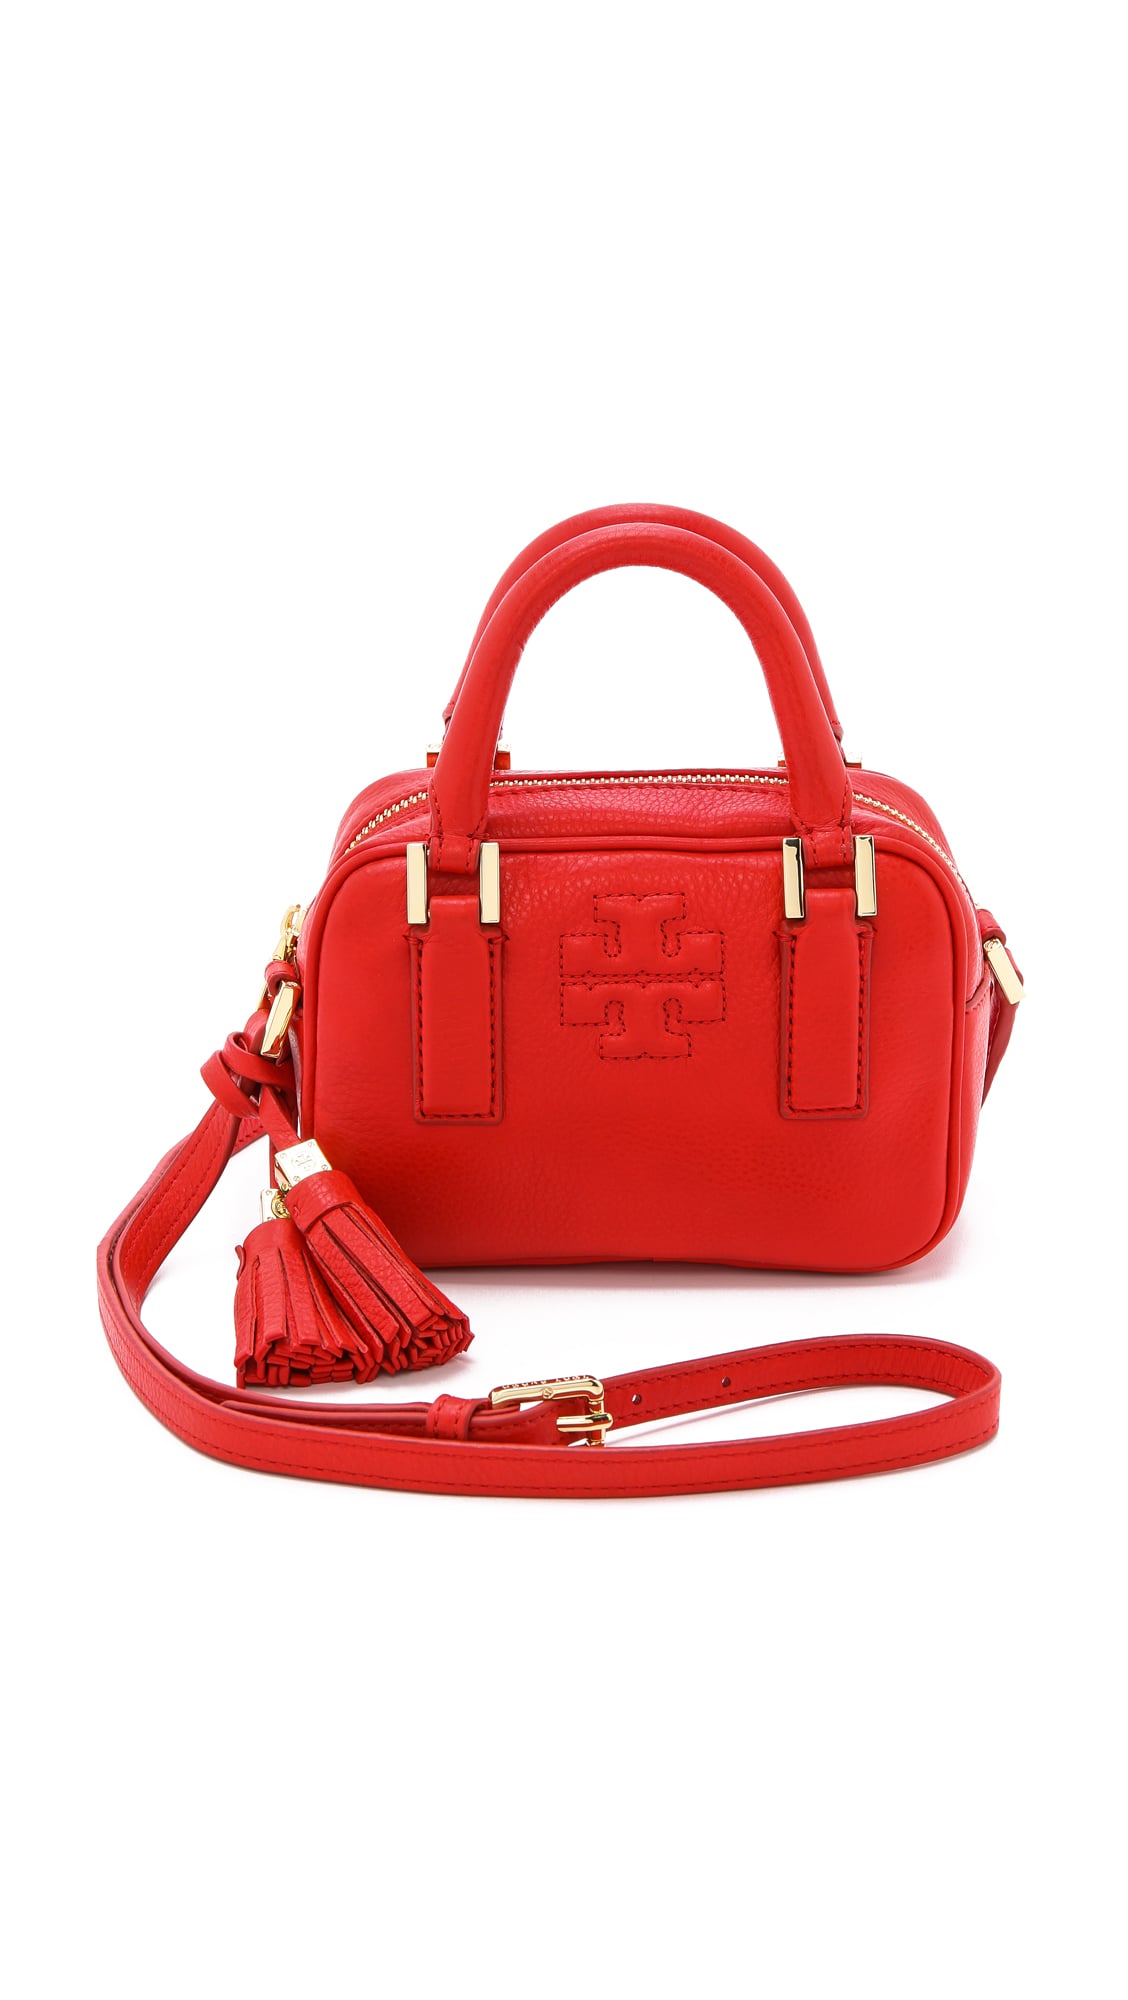 Tory Burch Mini Satchel | 16 Mini Bags That'll Give You Major Style Cred |  POPSUGAR Fashion Photo 15